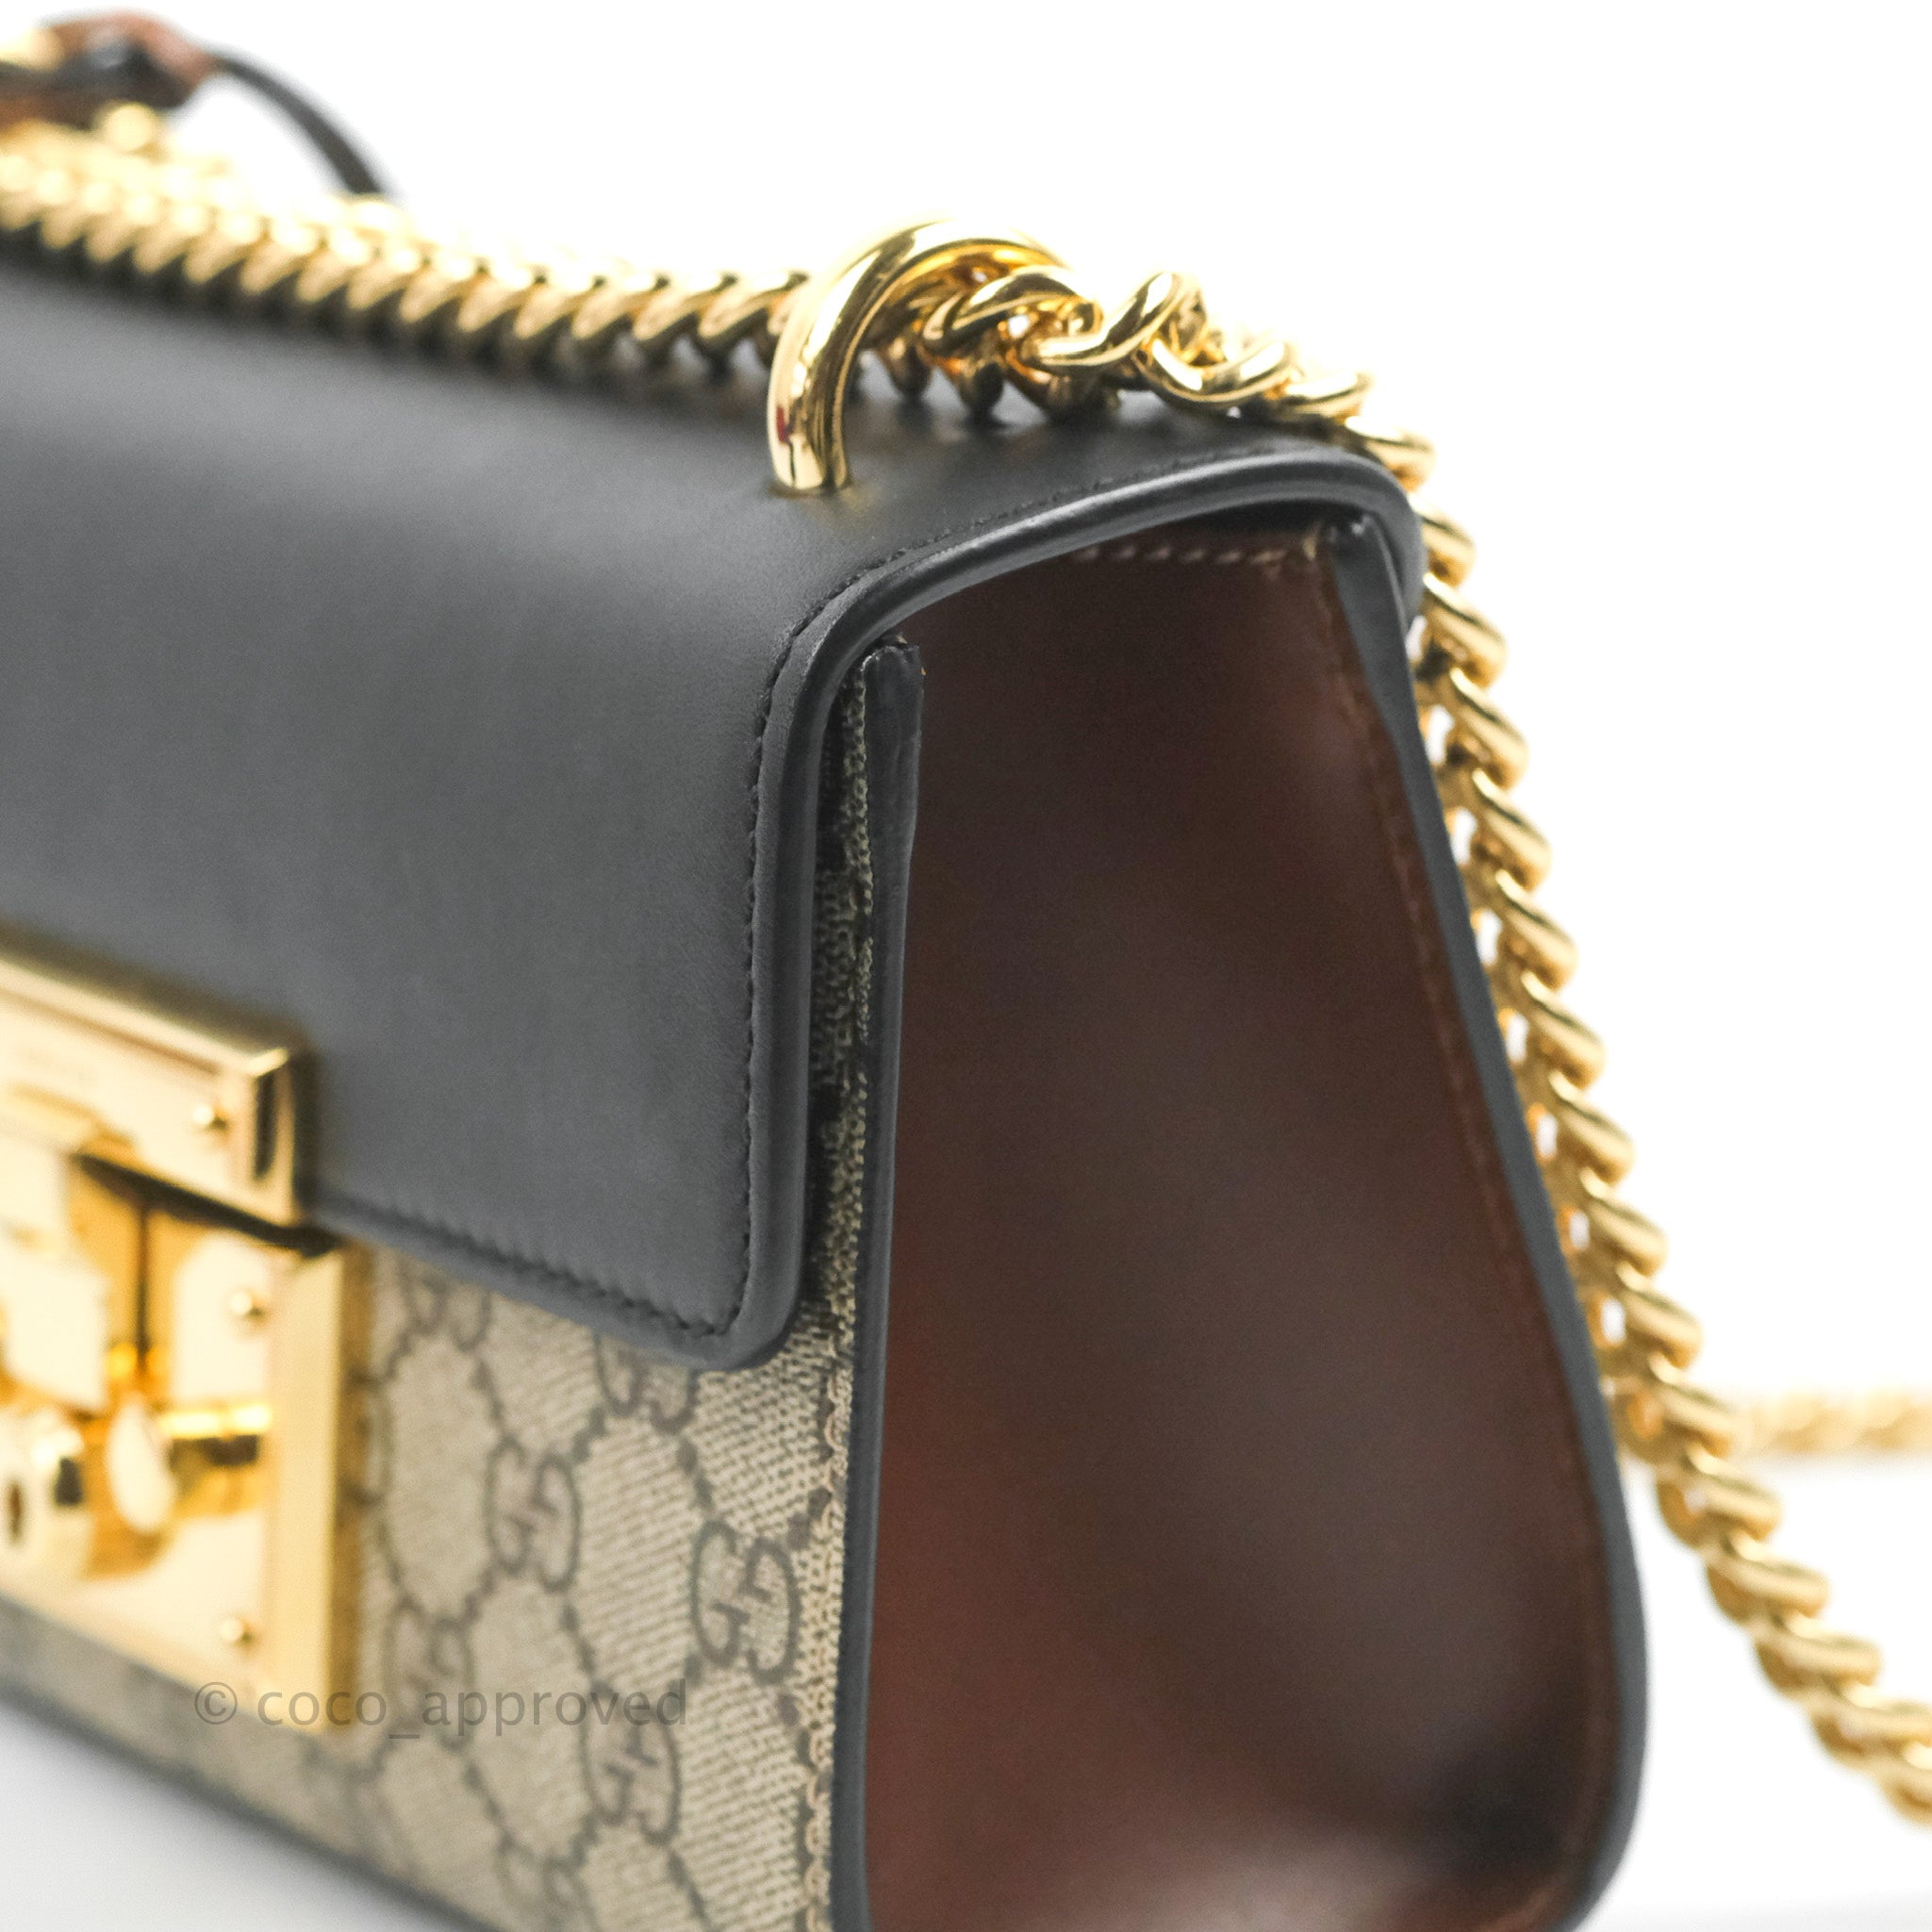 Padlock GG Mini Shoulder Bag in Beige - Gucci